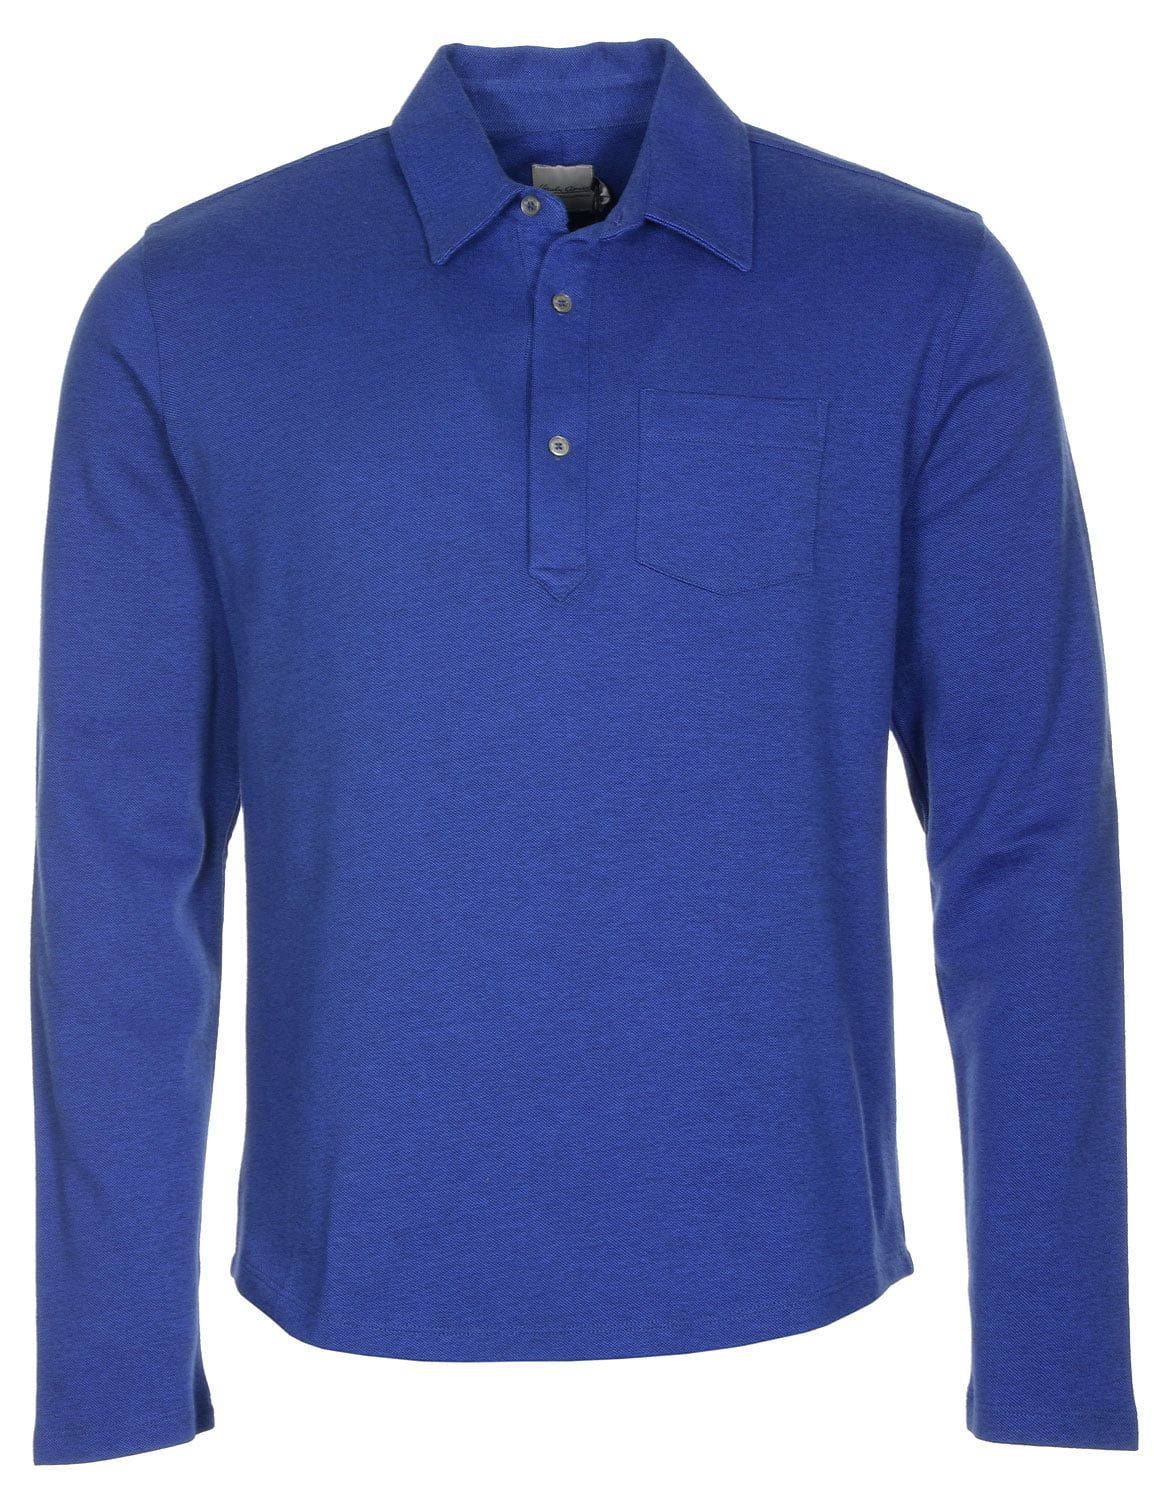 Hardy Amies Mens Slim Fit Long Sleeve Cotton Polo Shirt X Large Xl Cobalt Blue Walmart Com Walmart Com